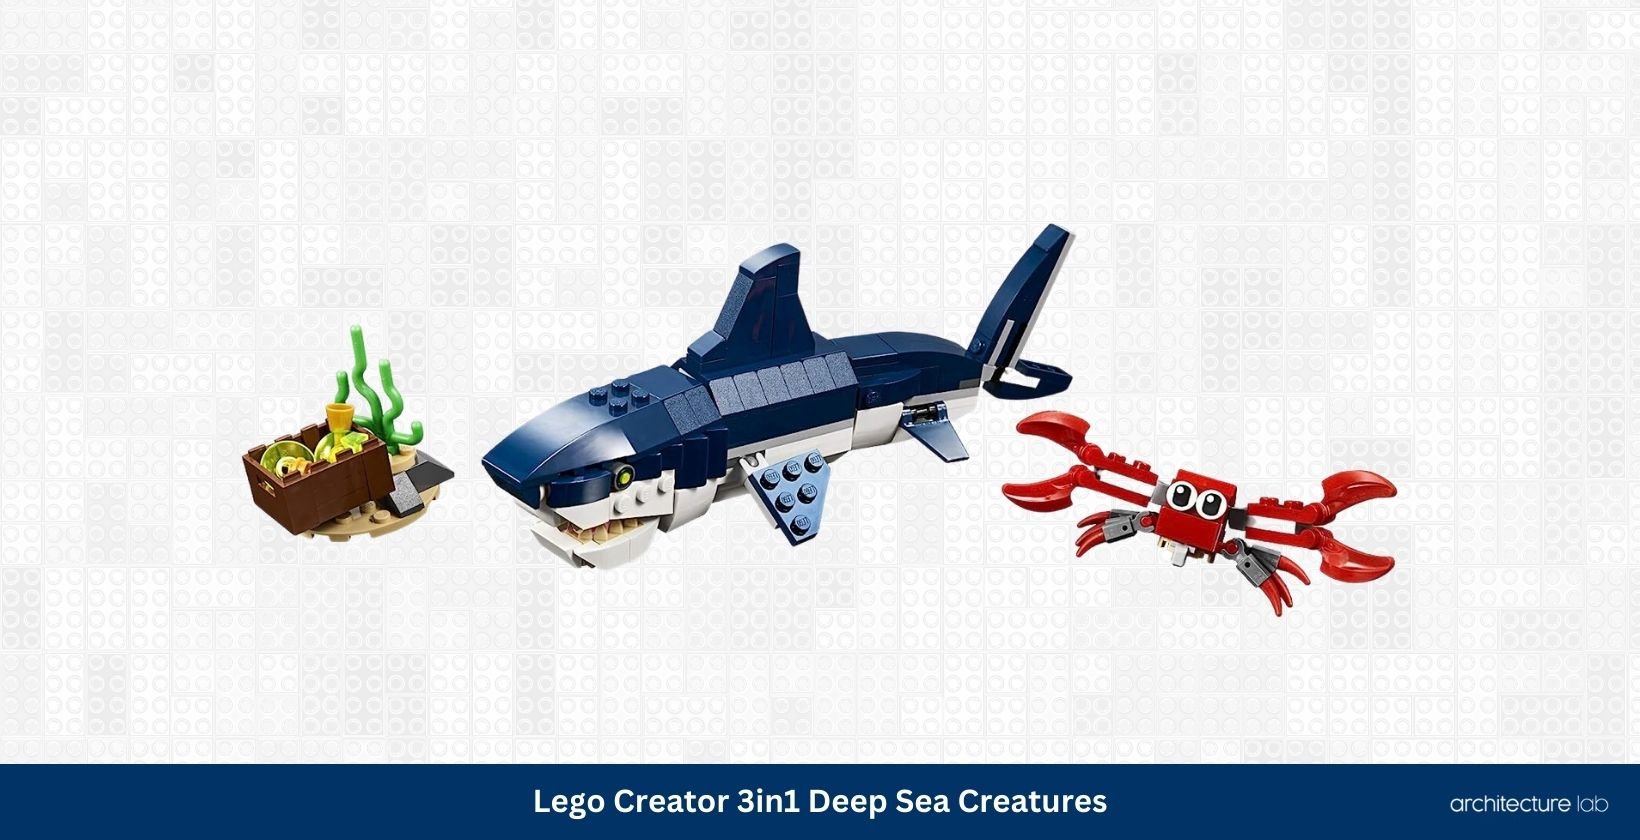 Lego creator 3in1 deep sea